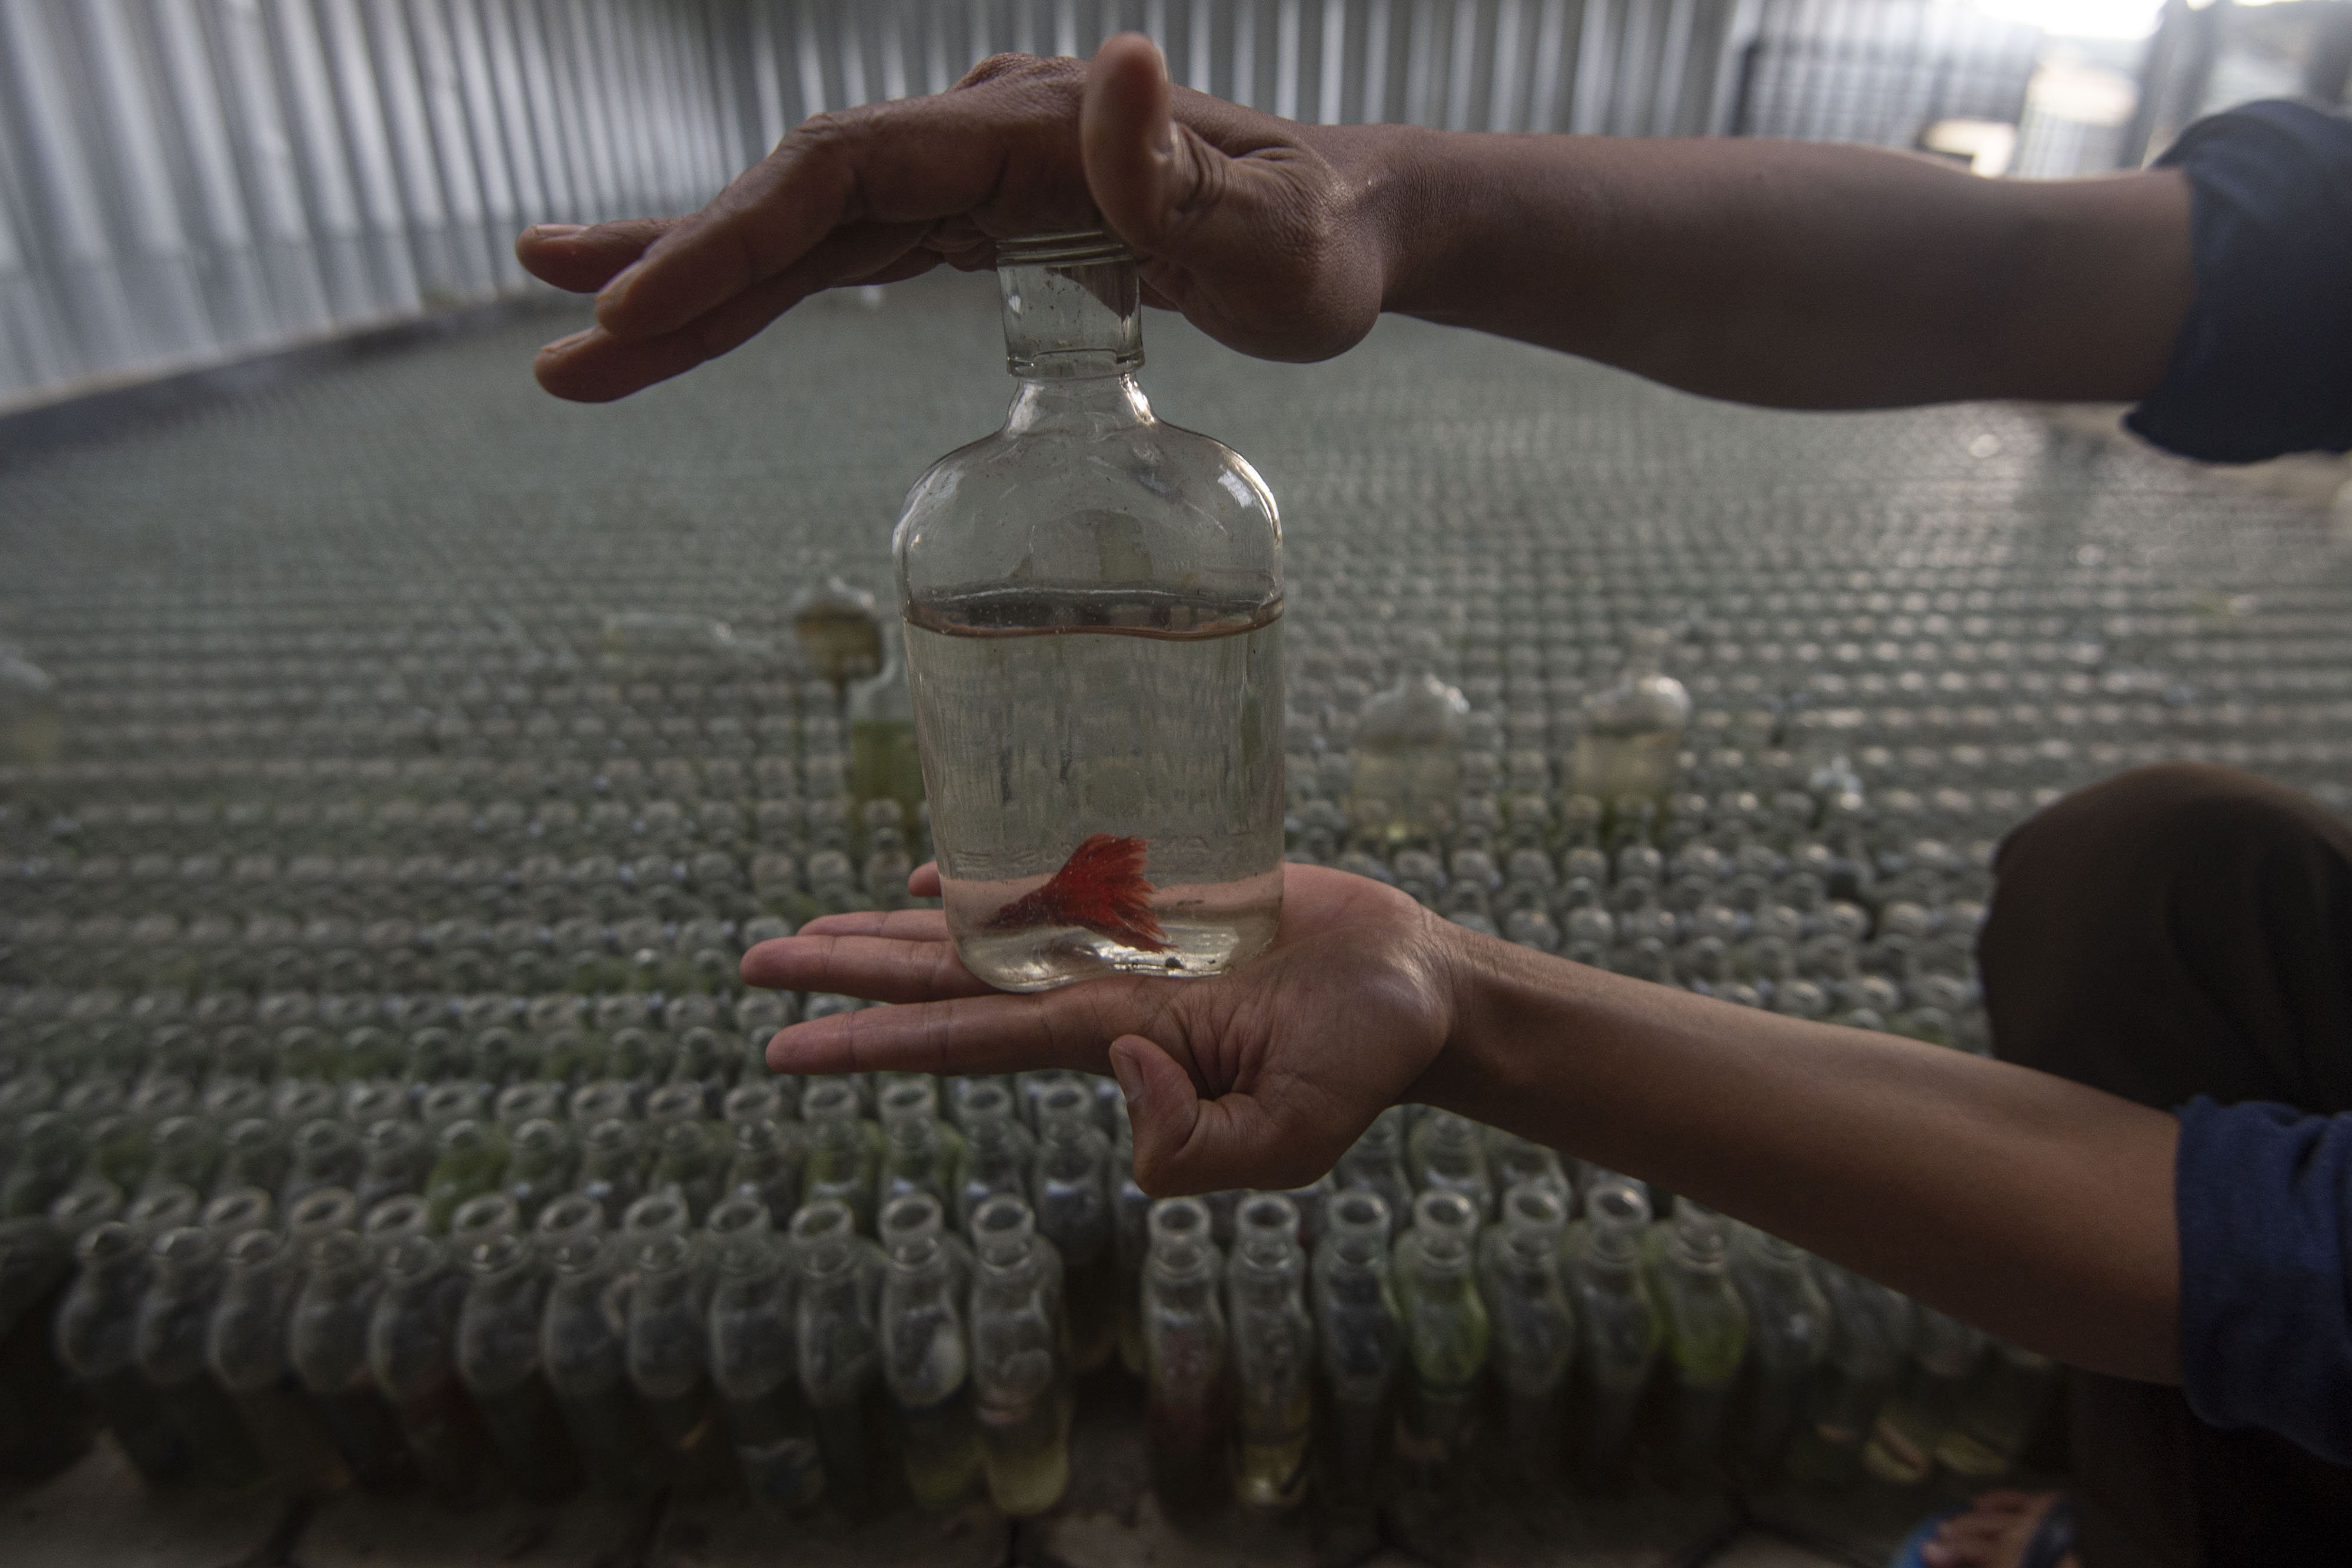 Peternak menunjukkan ikan cupang yang memasuki tahap pemisahan (soliter) pada botol-botol di salah satu peternkan di Bogor, Jawa Barat.